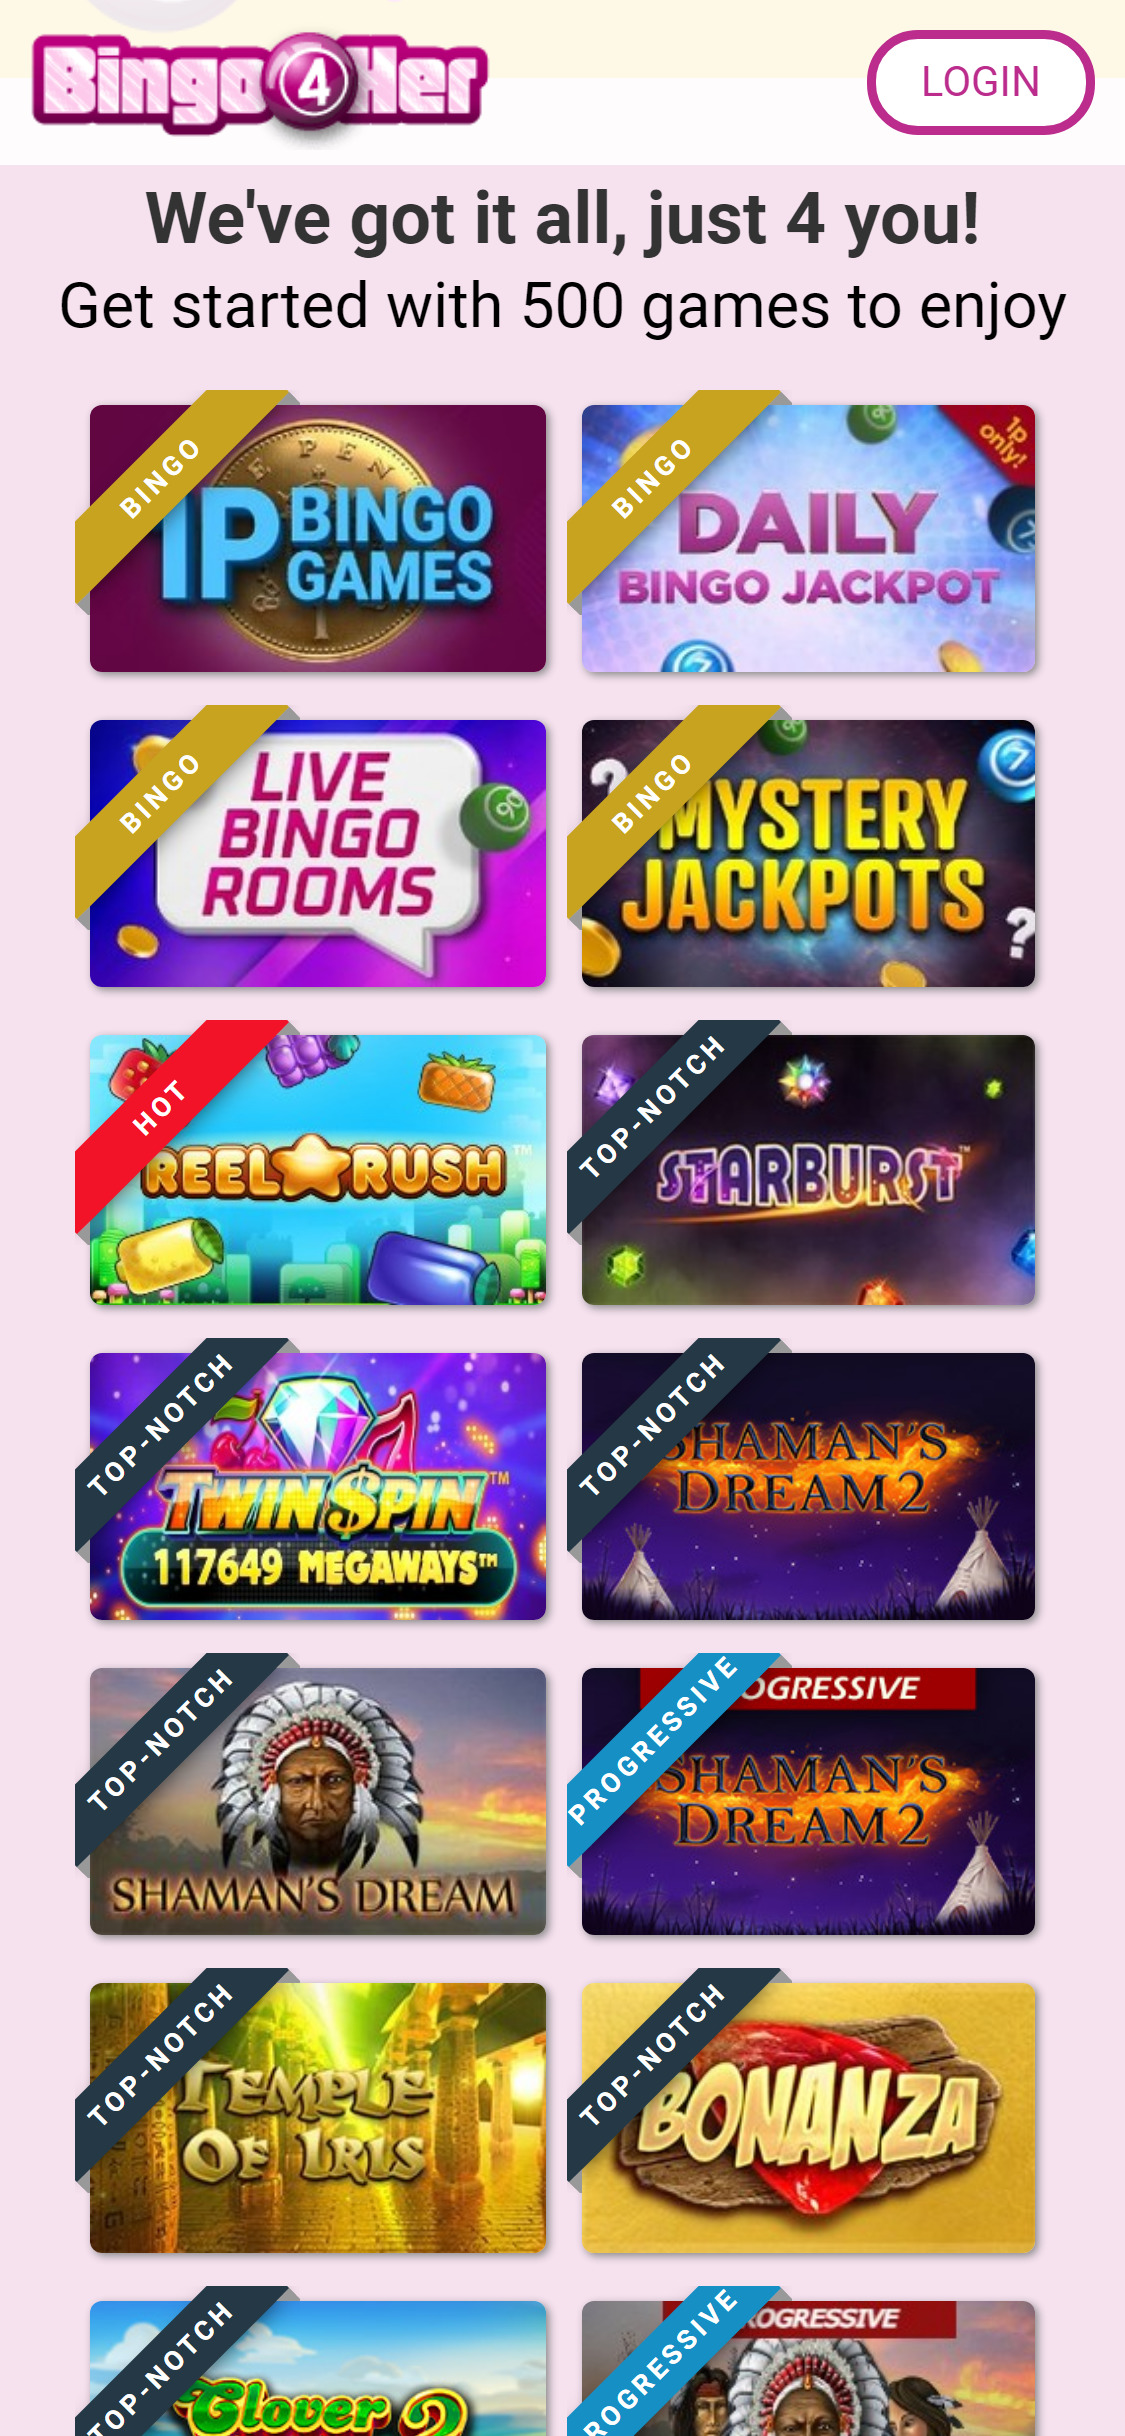 Bingo 4 Her Casino Mobile Games Review